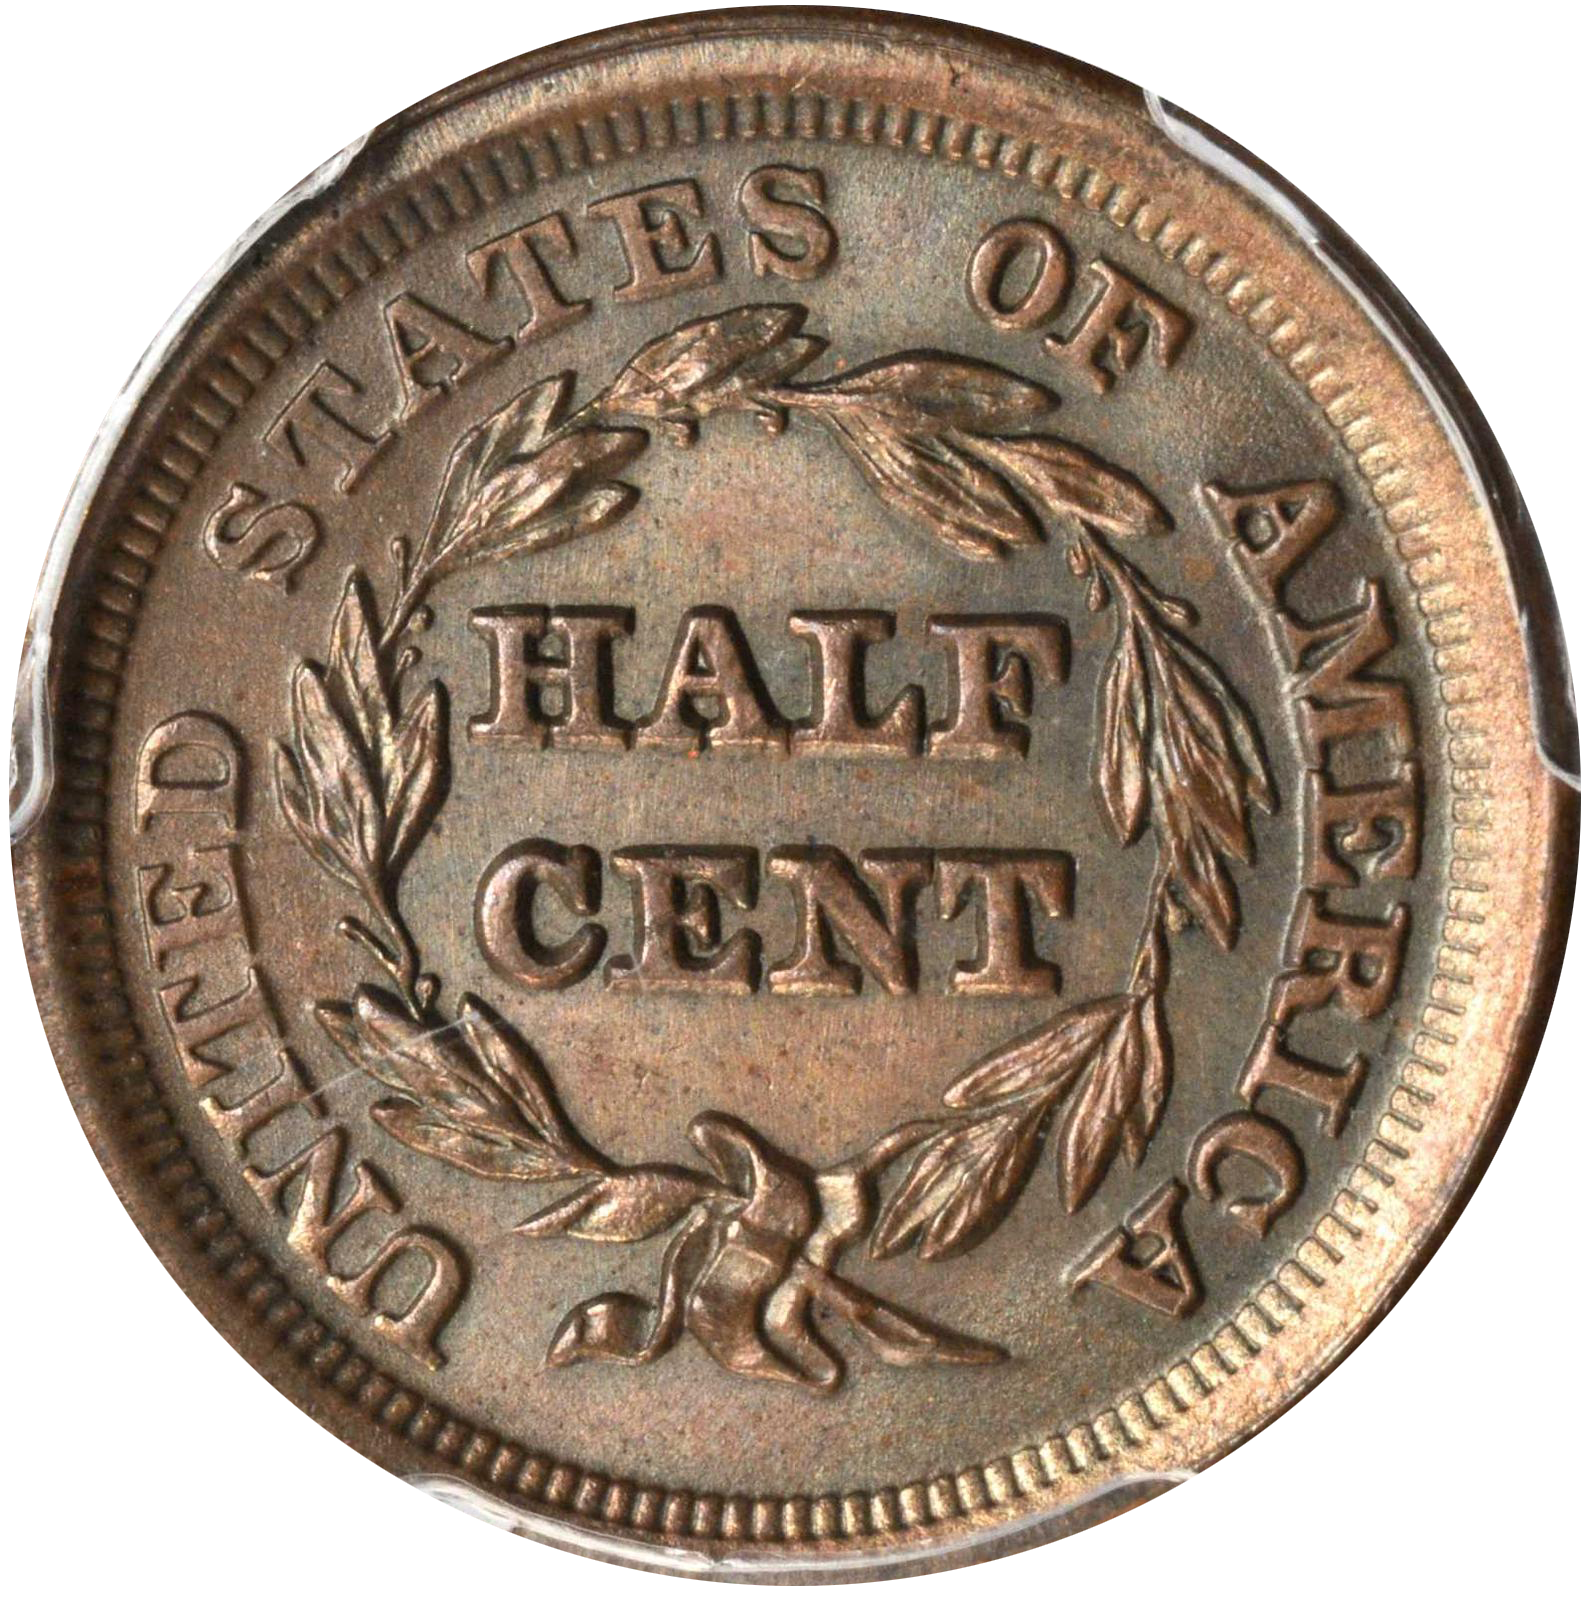 Braided Hair Half Cents (1840-1857) for sale